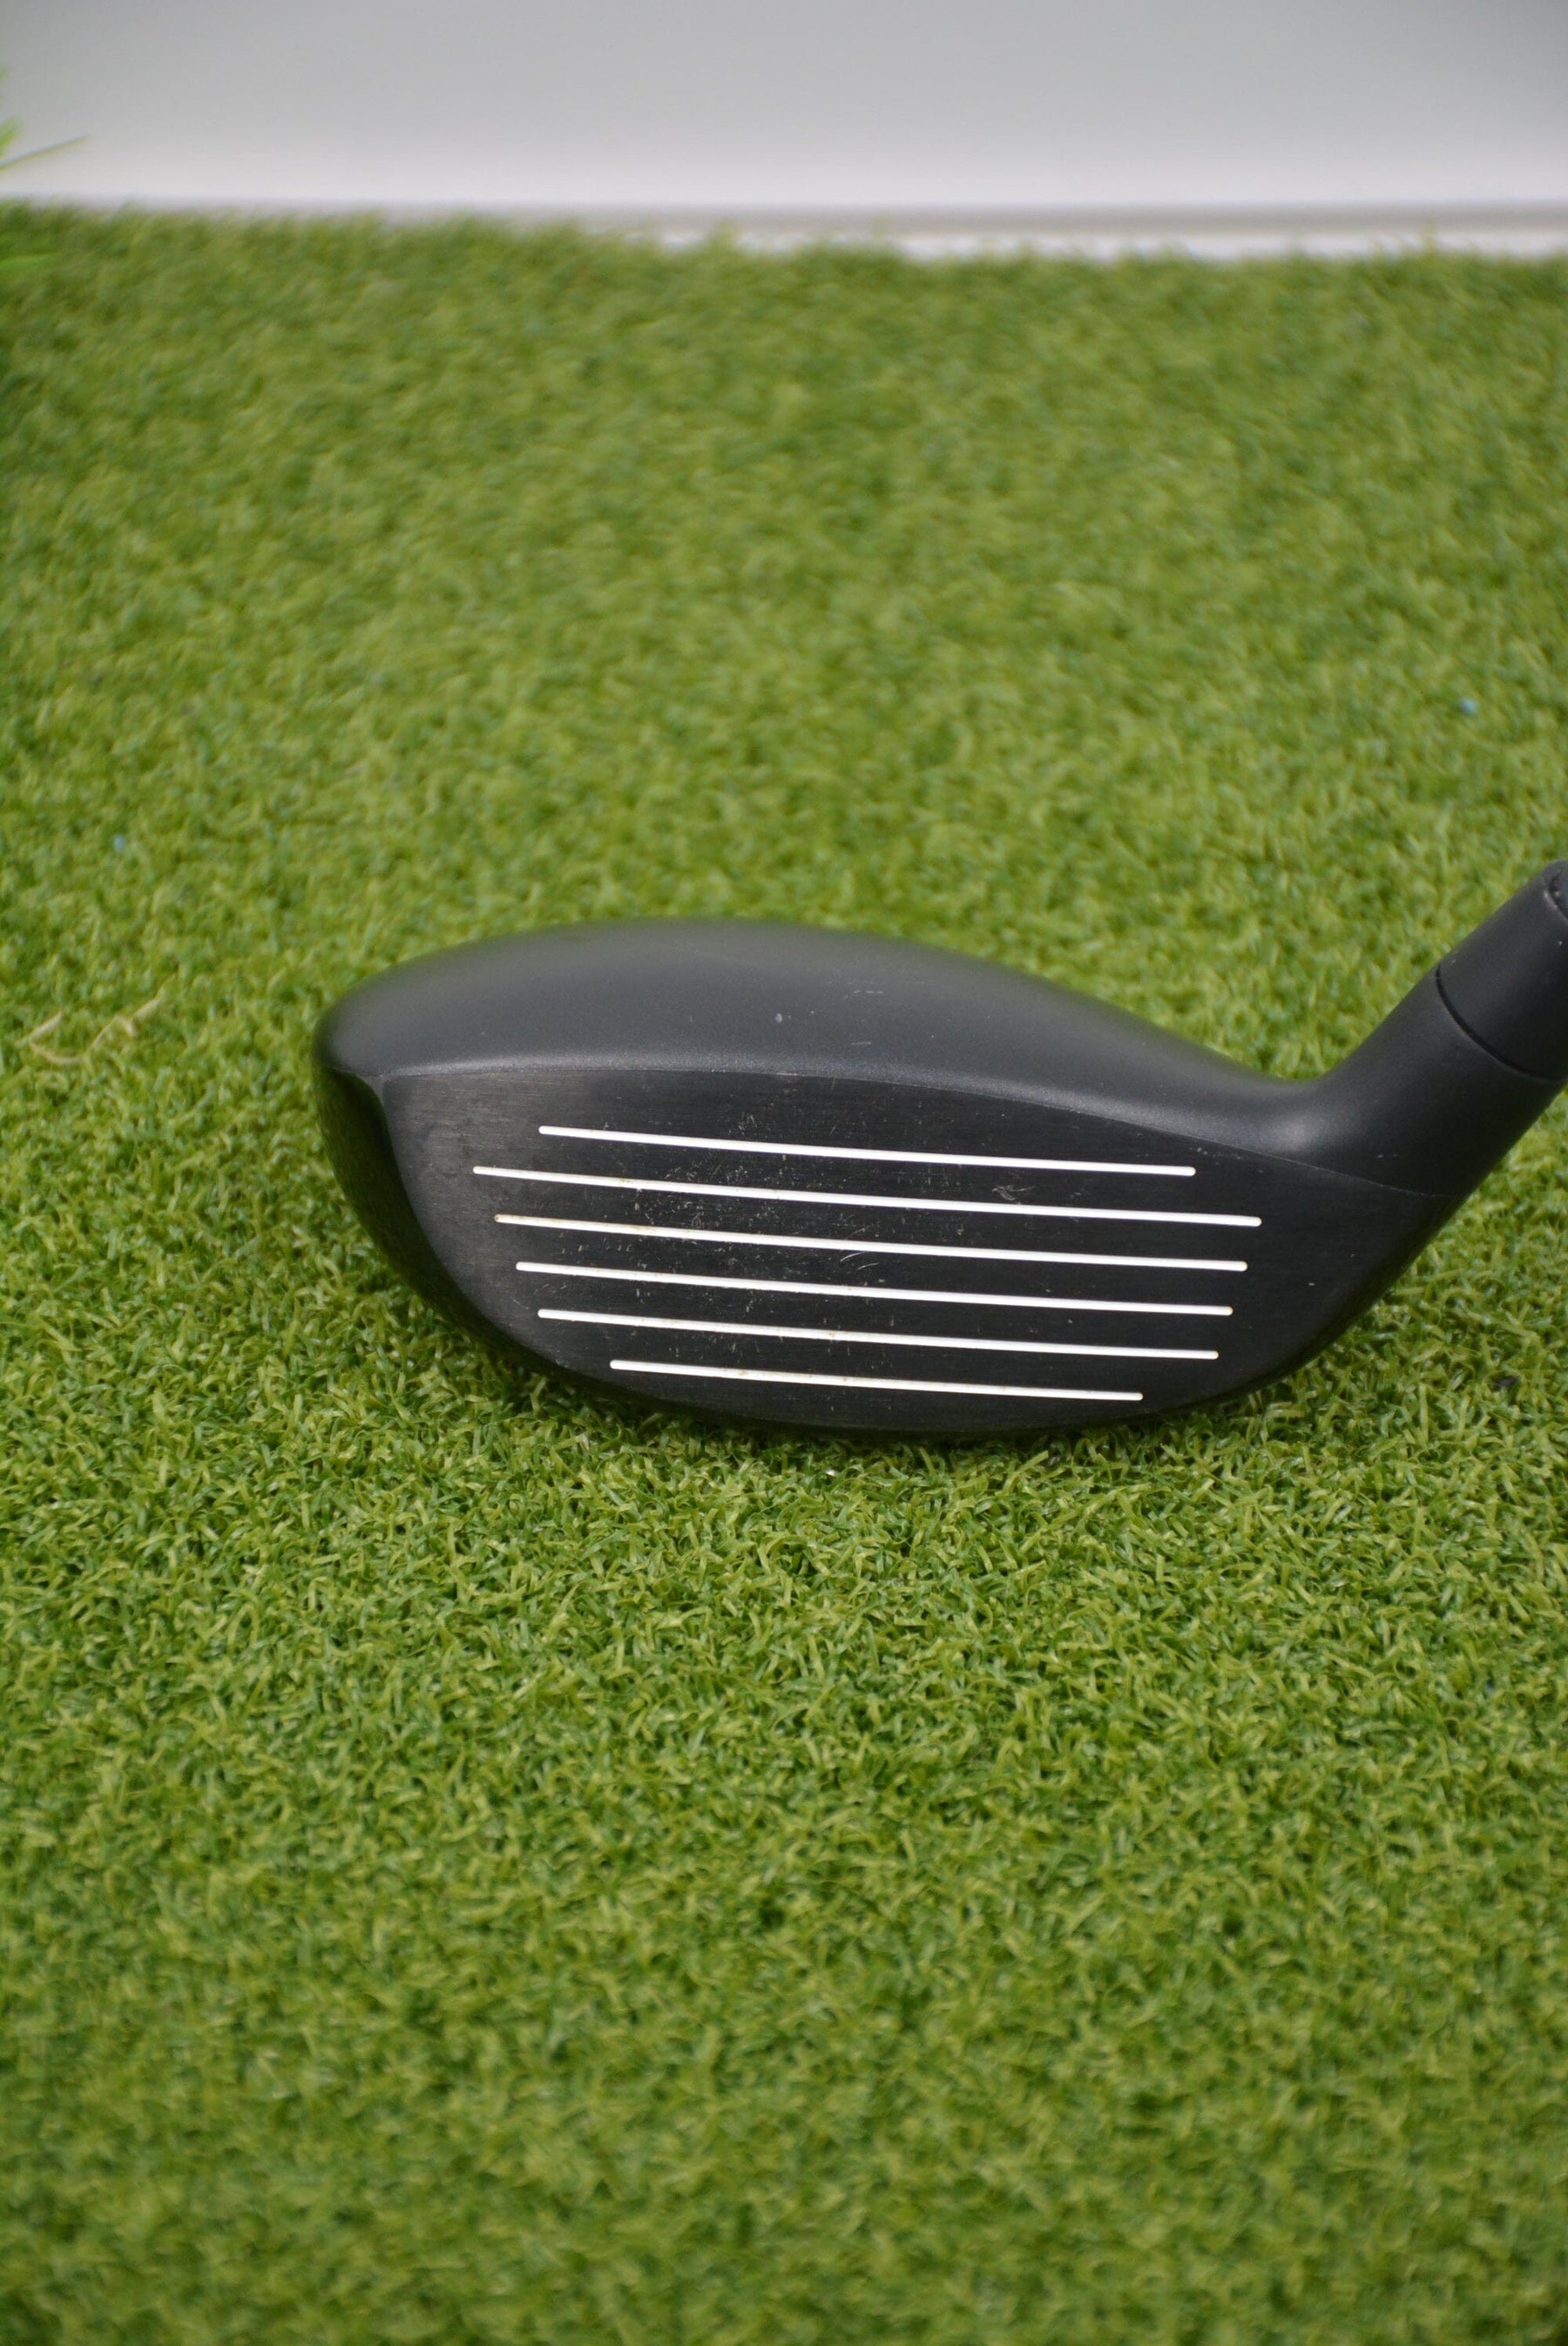 PXG 0317 25 Degree Hybrid S Flex Golf Clubs GolfRoots 